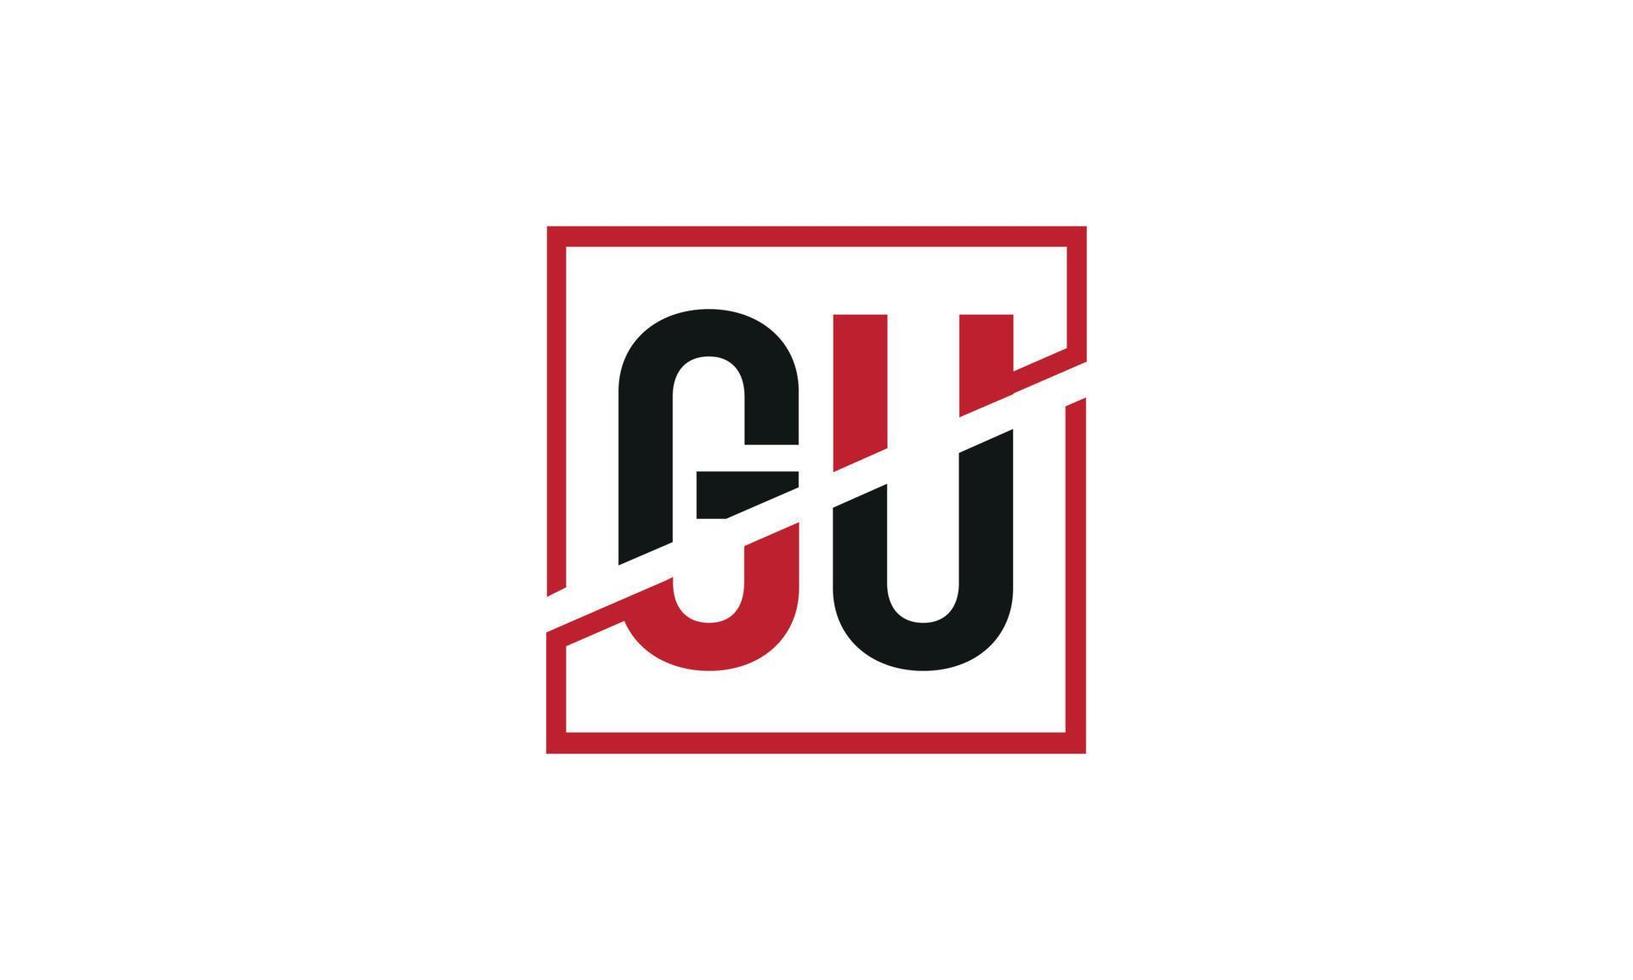 GU logo design. Initial GU letter logo monogram design in black and red color with square shape. Pro vector